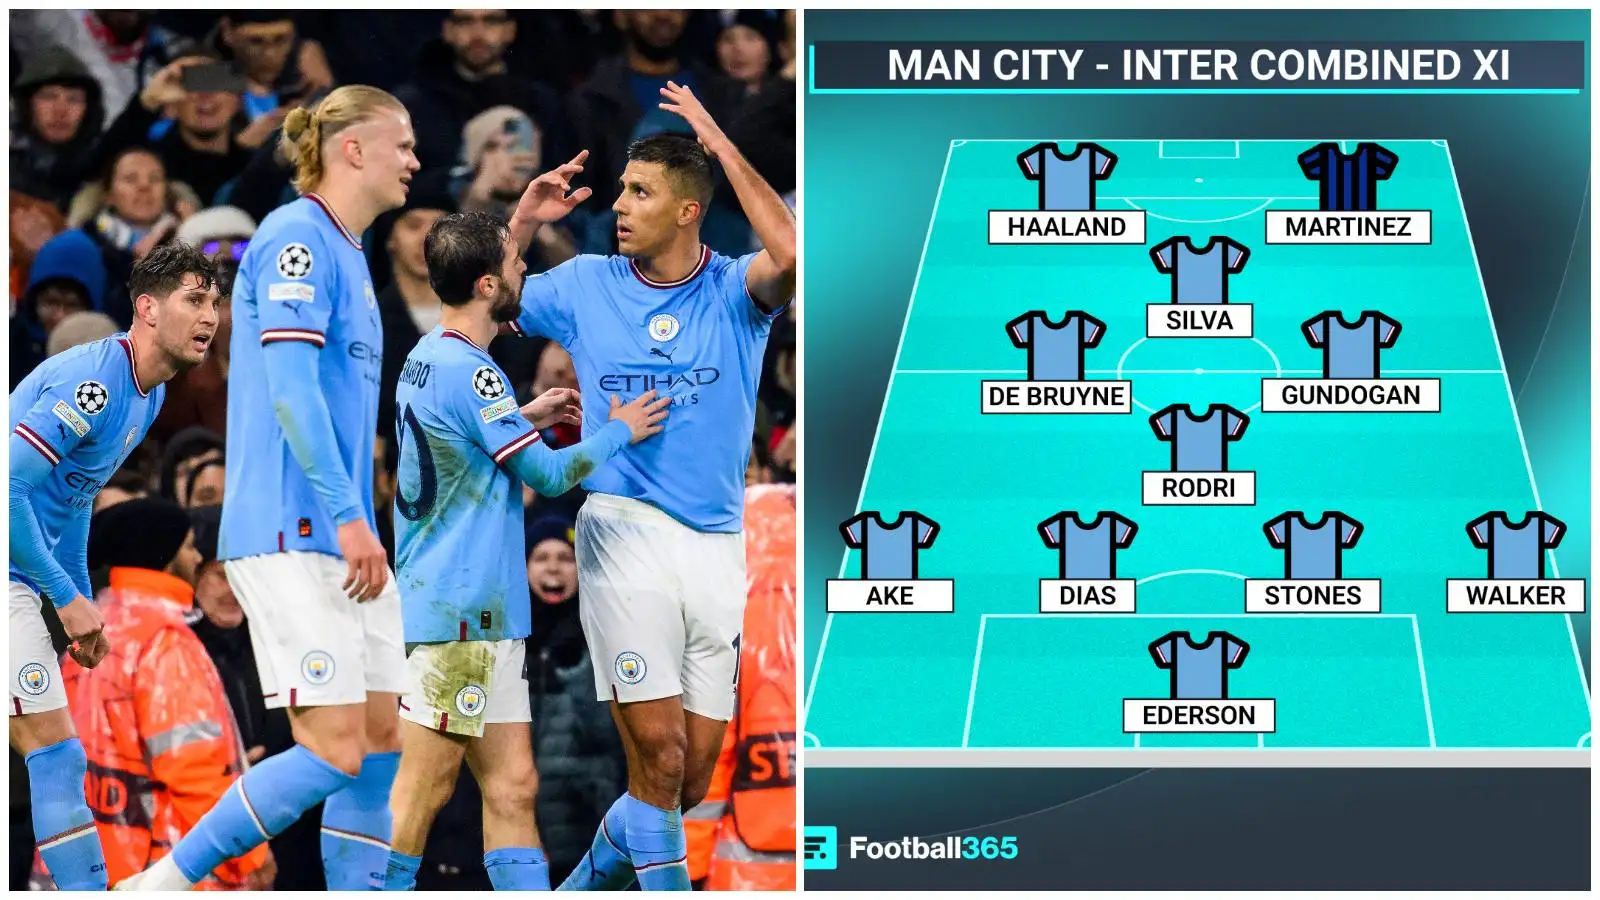 Man City - Inter combined XI